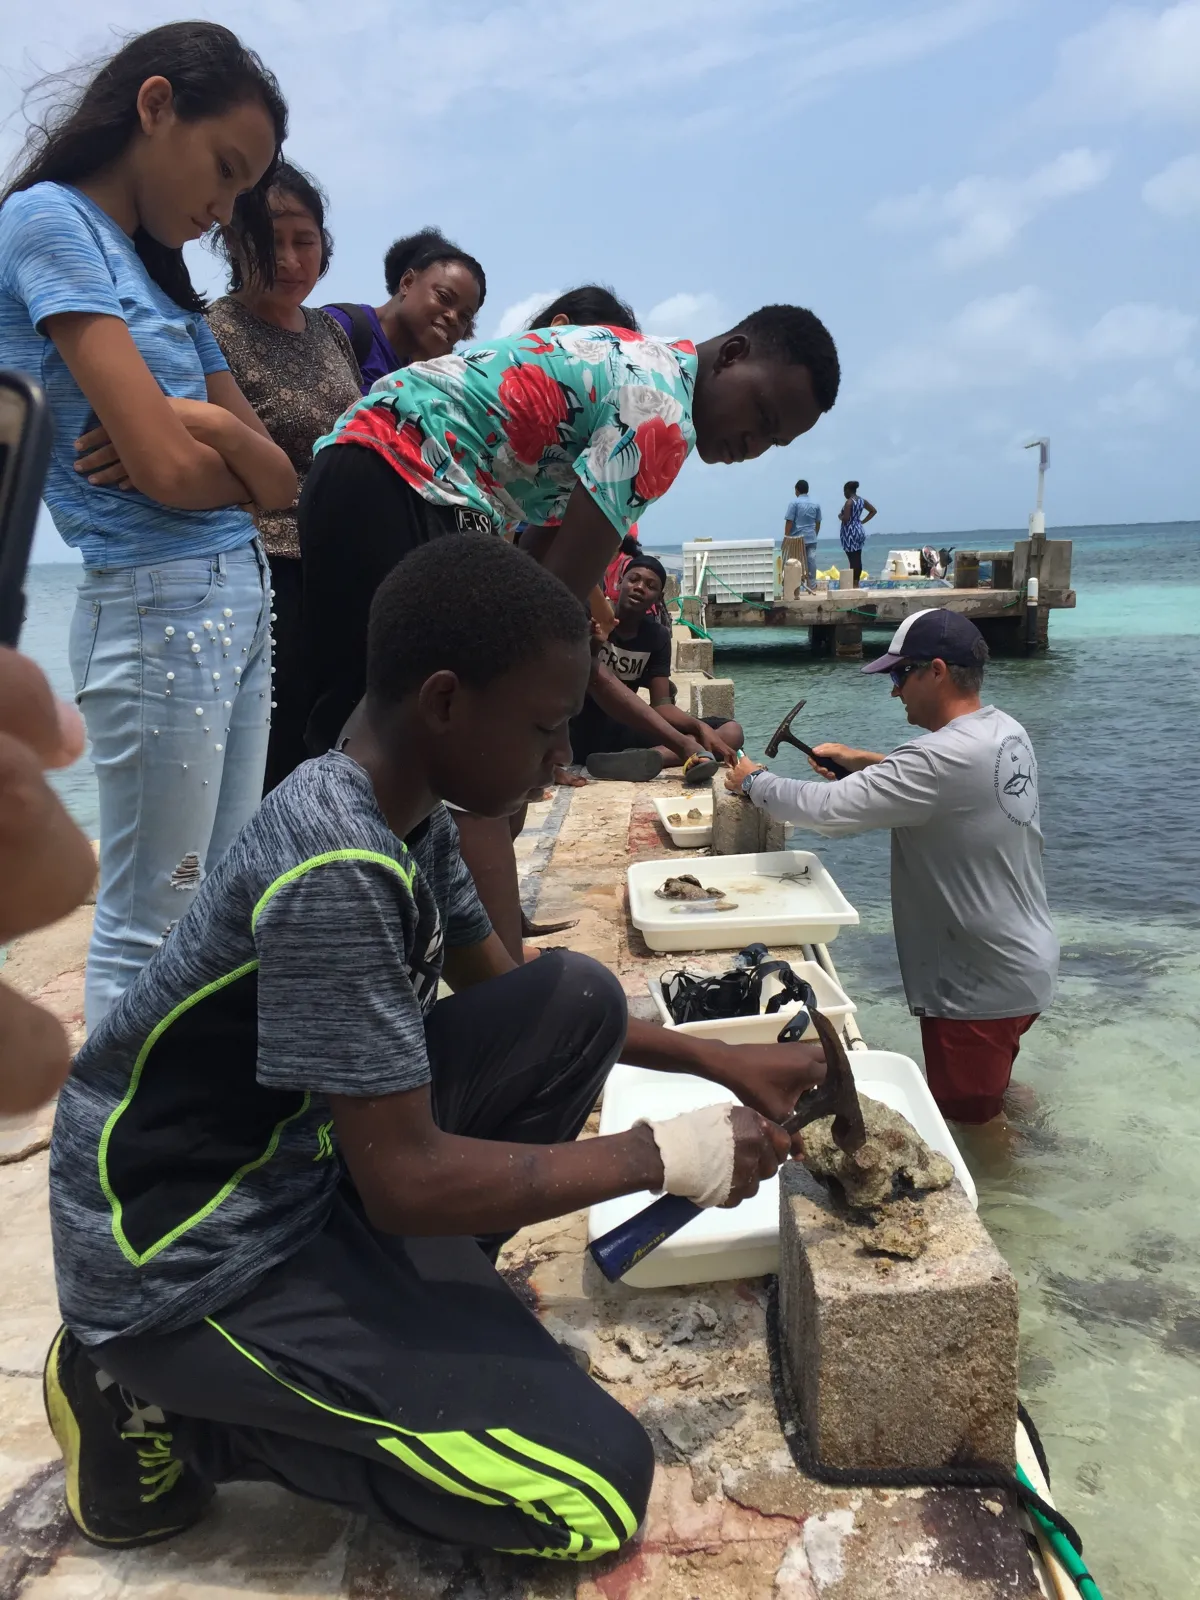 Kids examining conch shells.